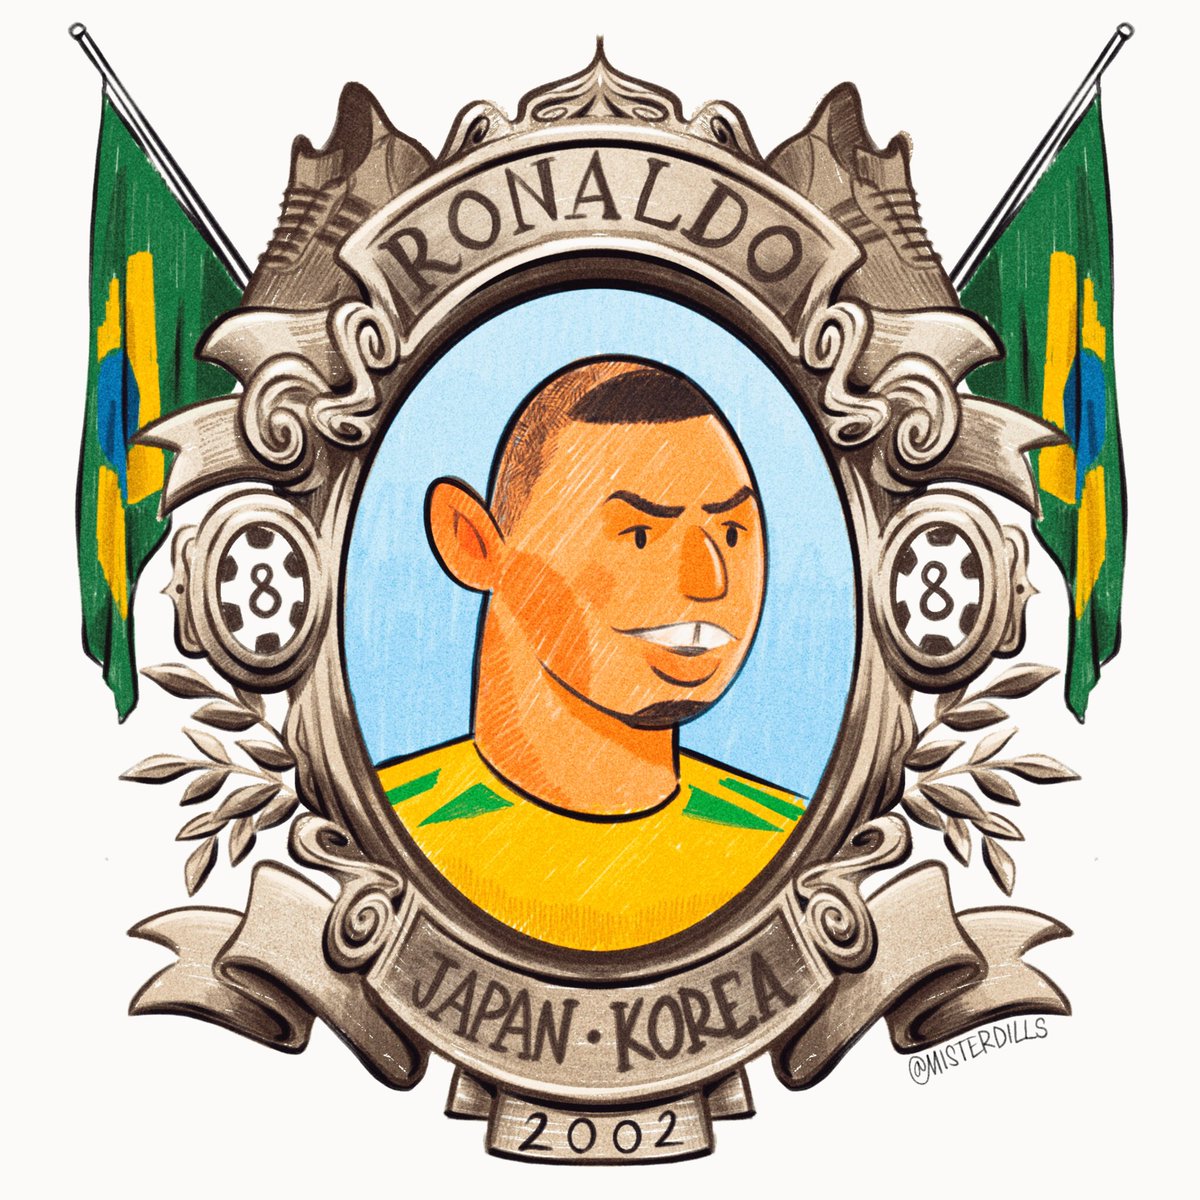 R9 🐐 
#ronaldo #worldcup #goldenboot